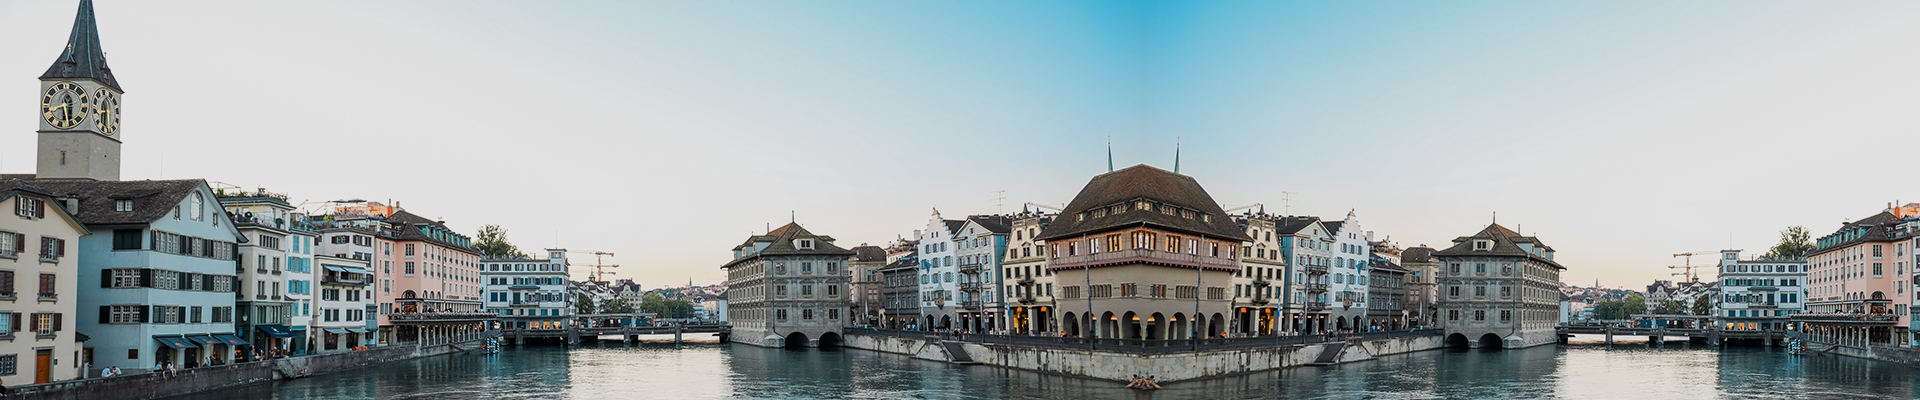 Switzerland Tour Package